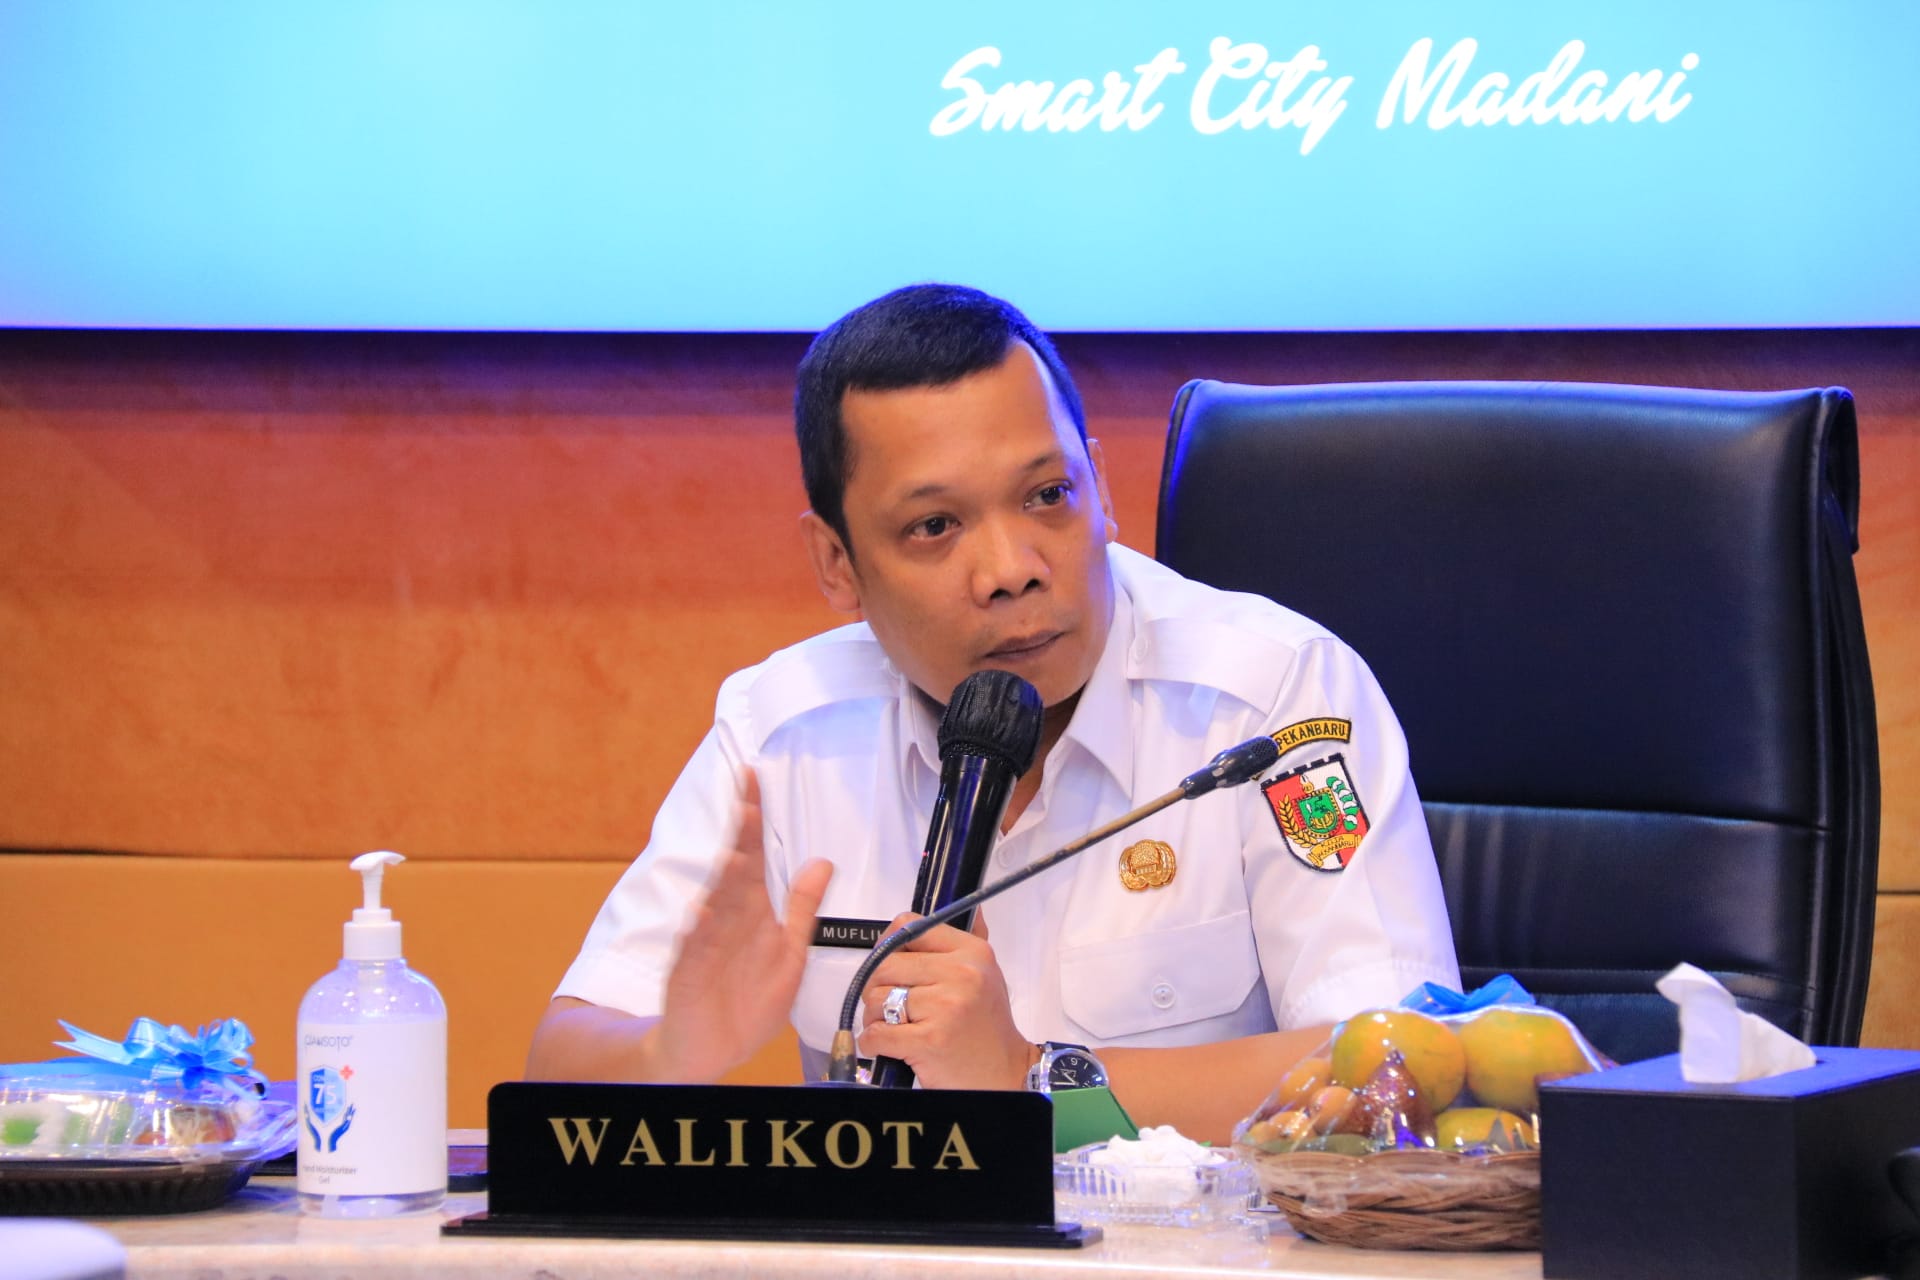 Walikota Koordinasi Polresta Terkait Kriminalitas di Pekanbaru